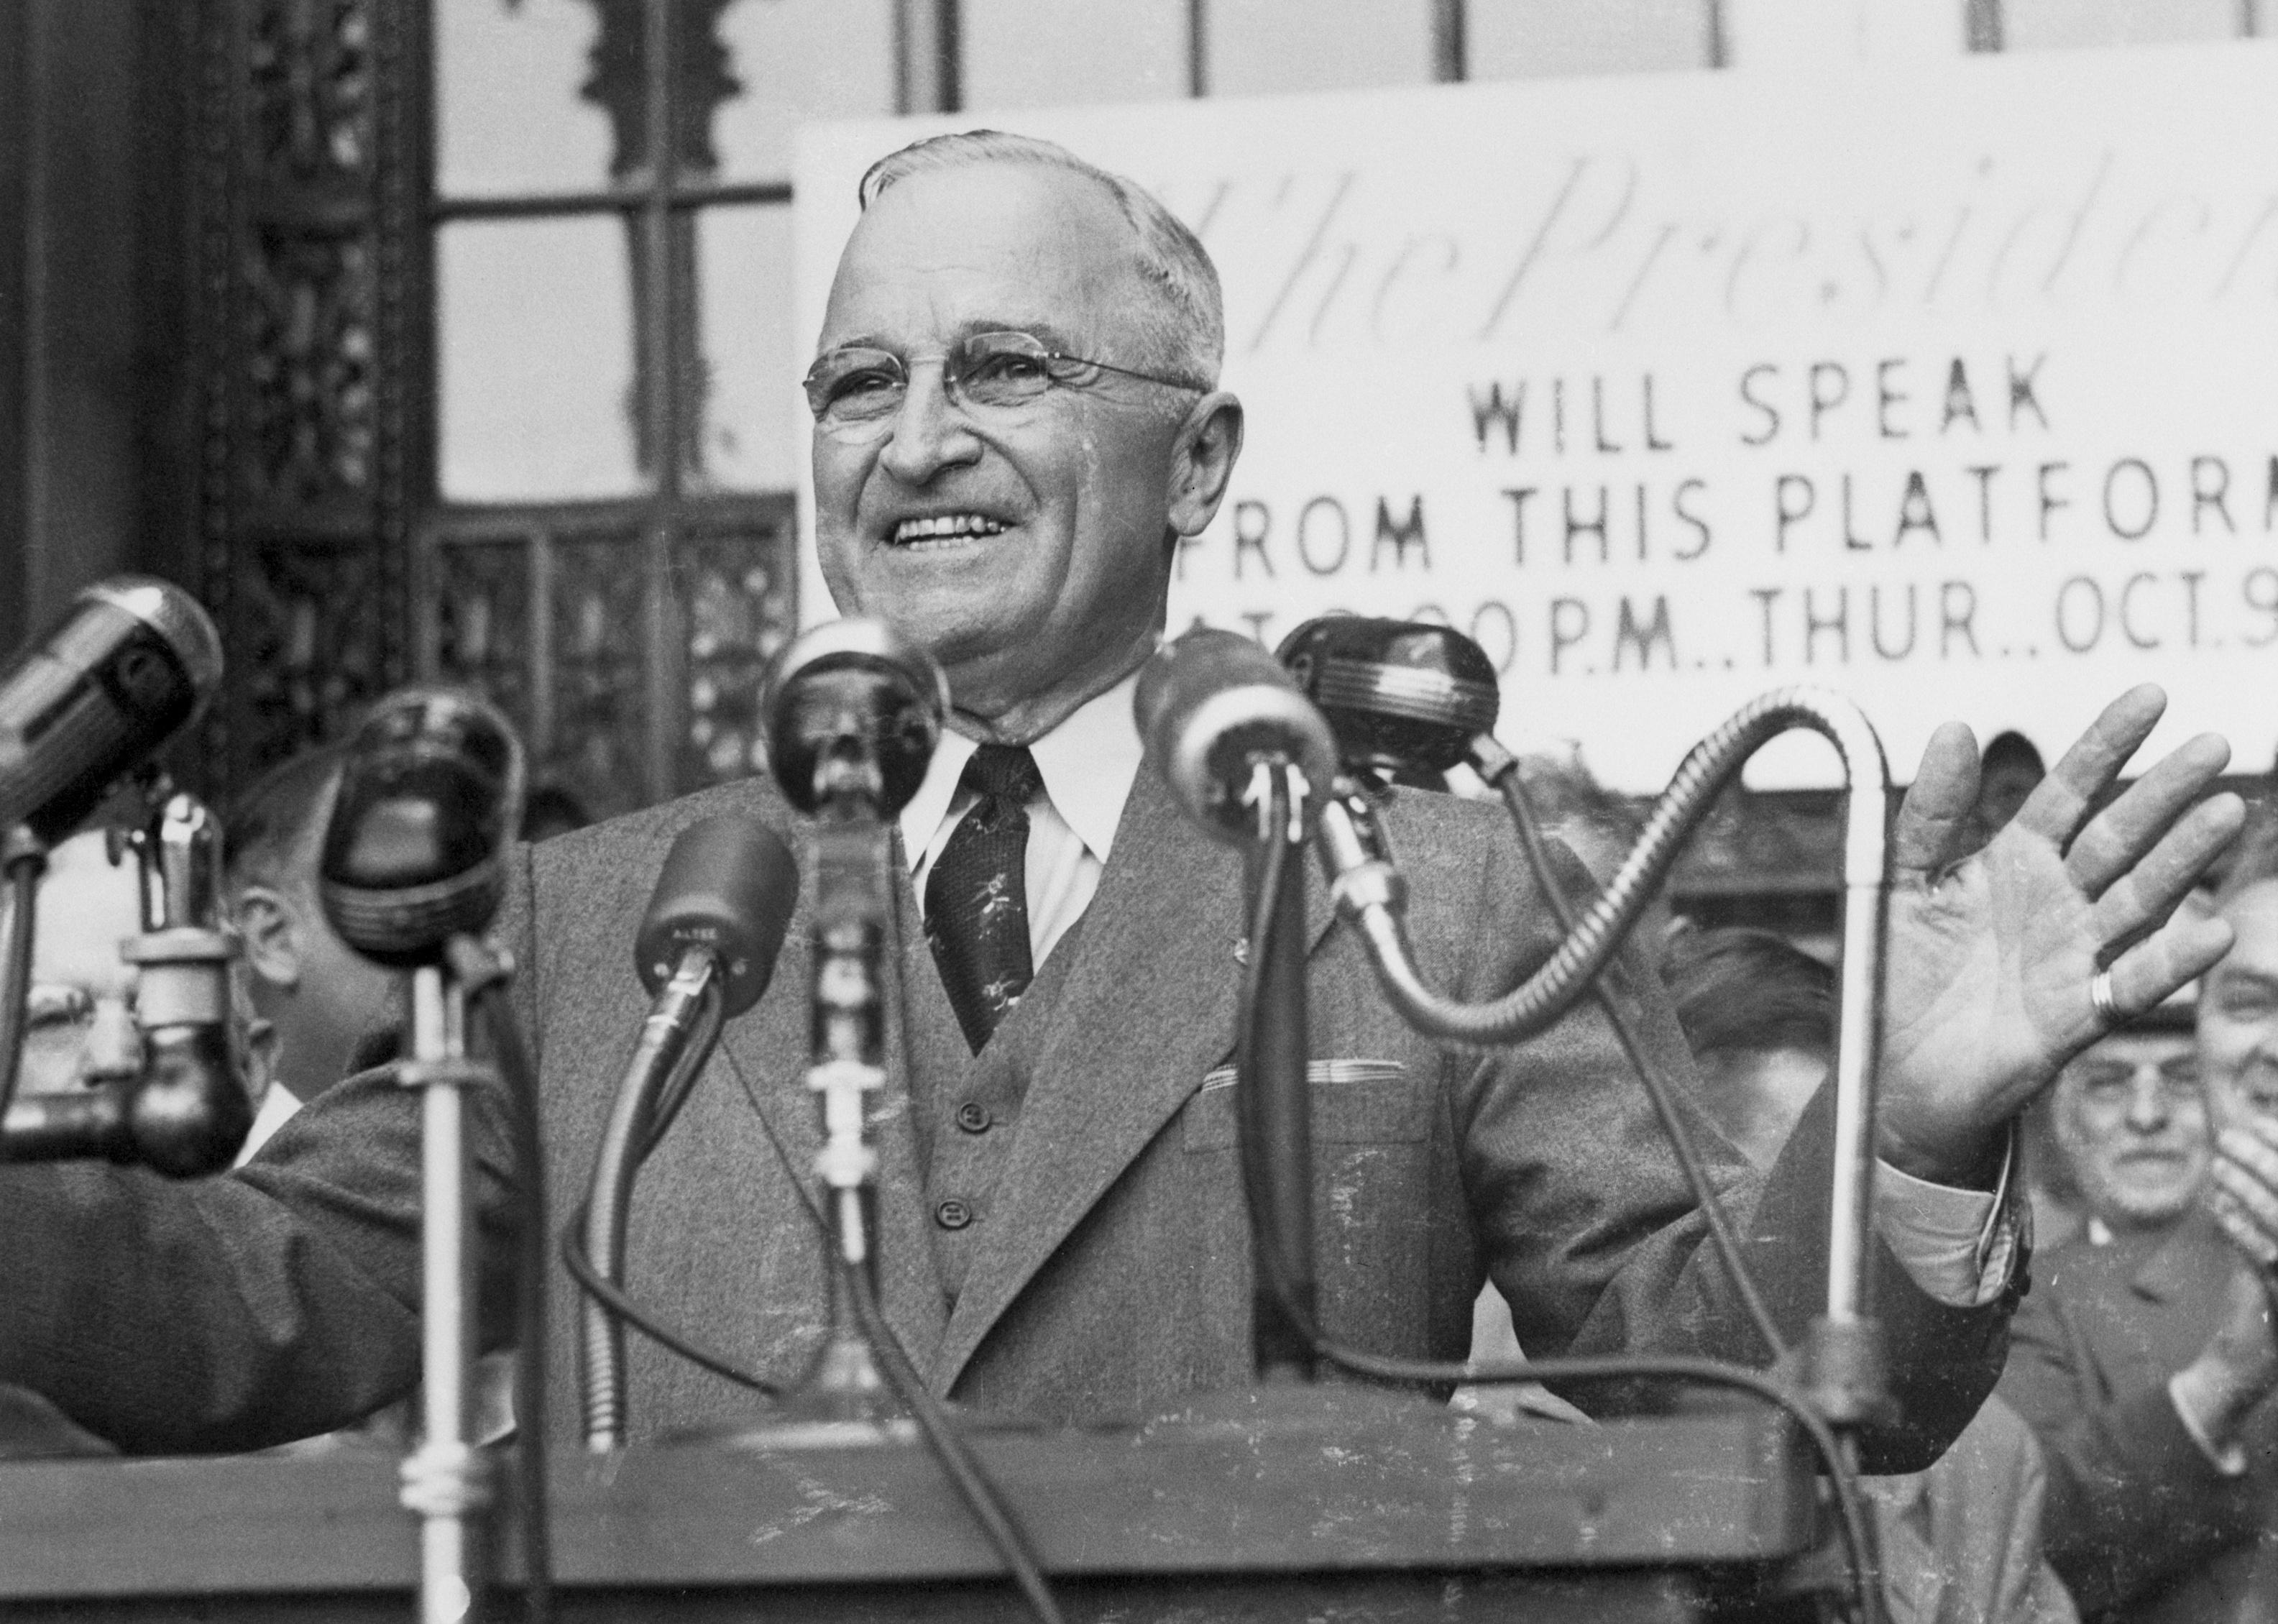 Harry S. Truman speaking at a podium full of microphones.